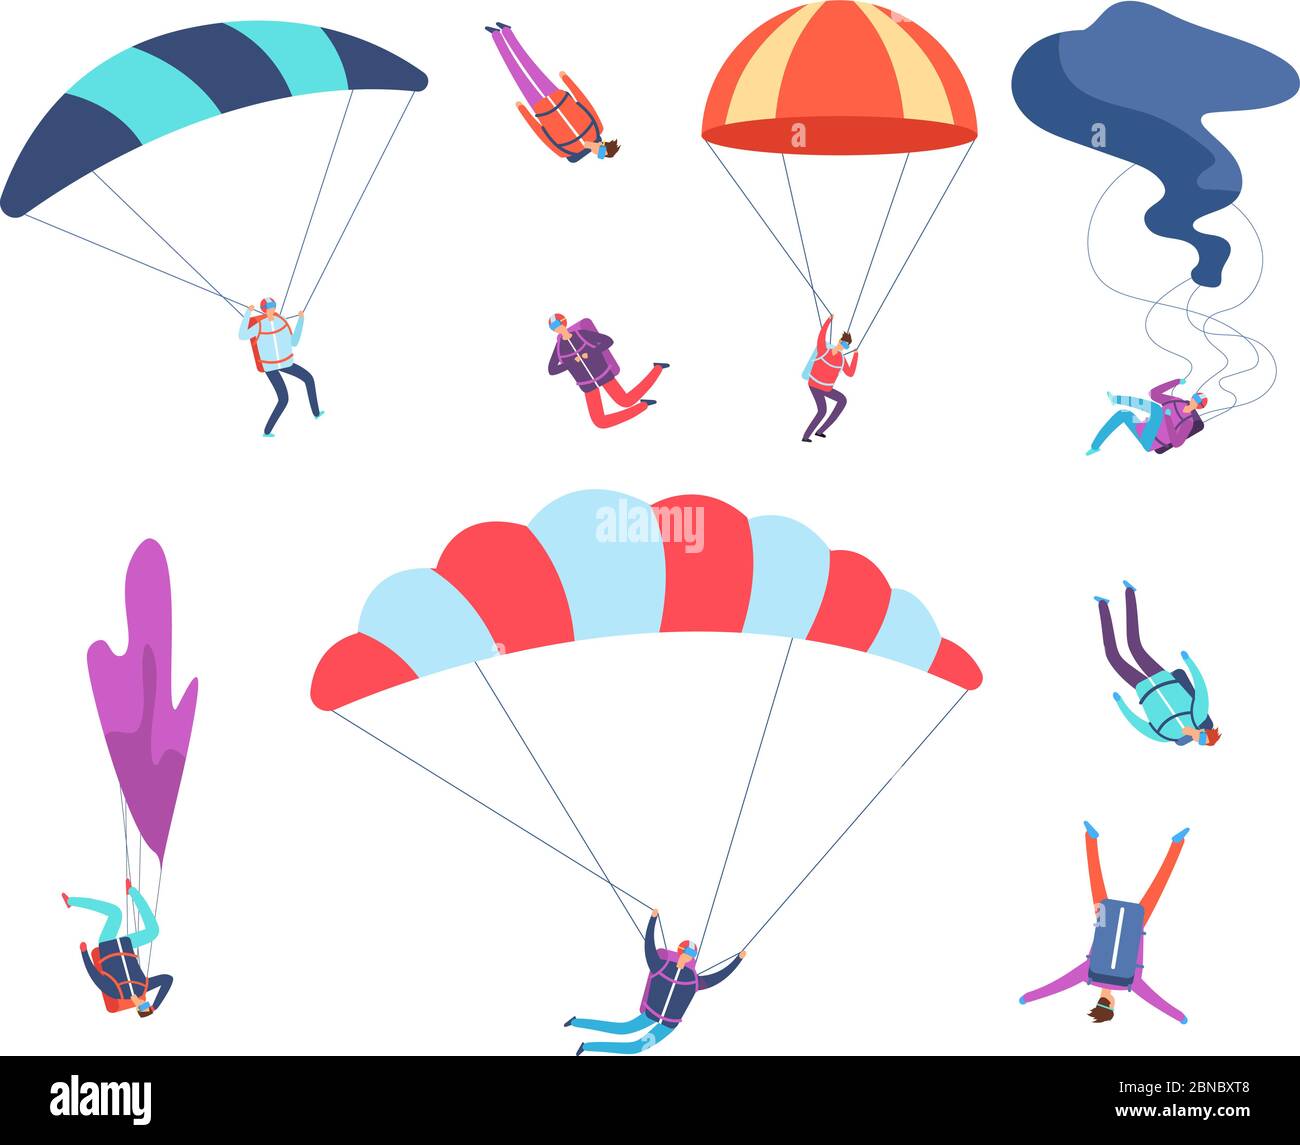 Fallschirmspringer Set. Menschen springen mit Fallschirmen. Gefährliche Sport Himmel Springer, Fallschirmspringer Cartoon Vektor-Charaktere. Abbildung Fallschirmspringen mit Fallschirm, Fallschirmjäger und Fallschirmspringen Stock Vektor